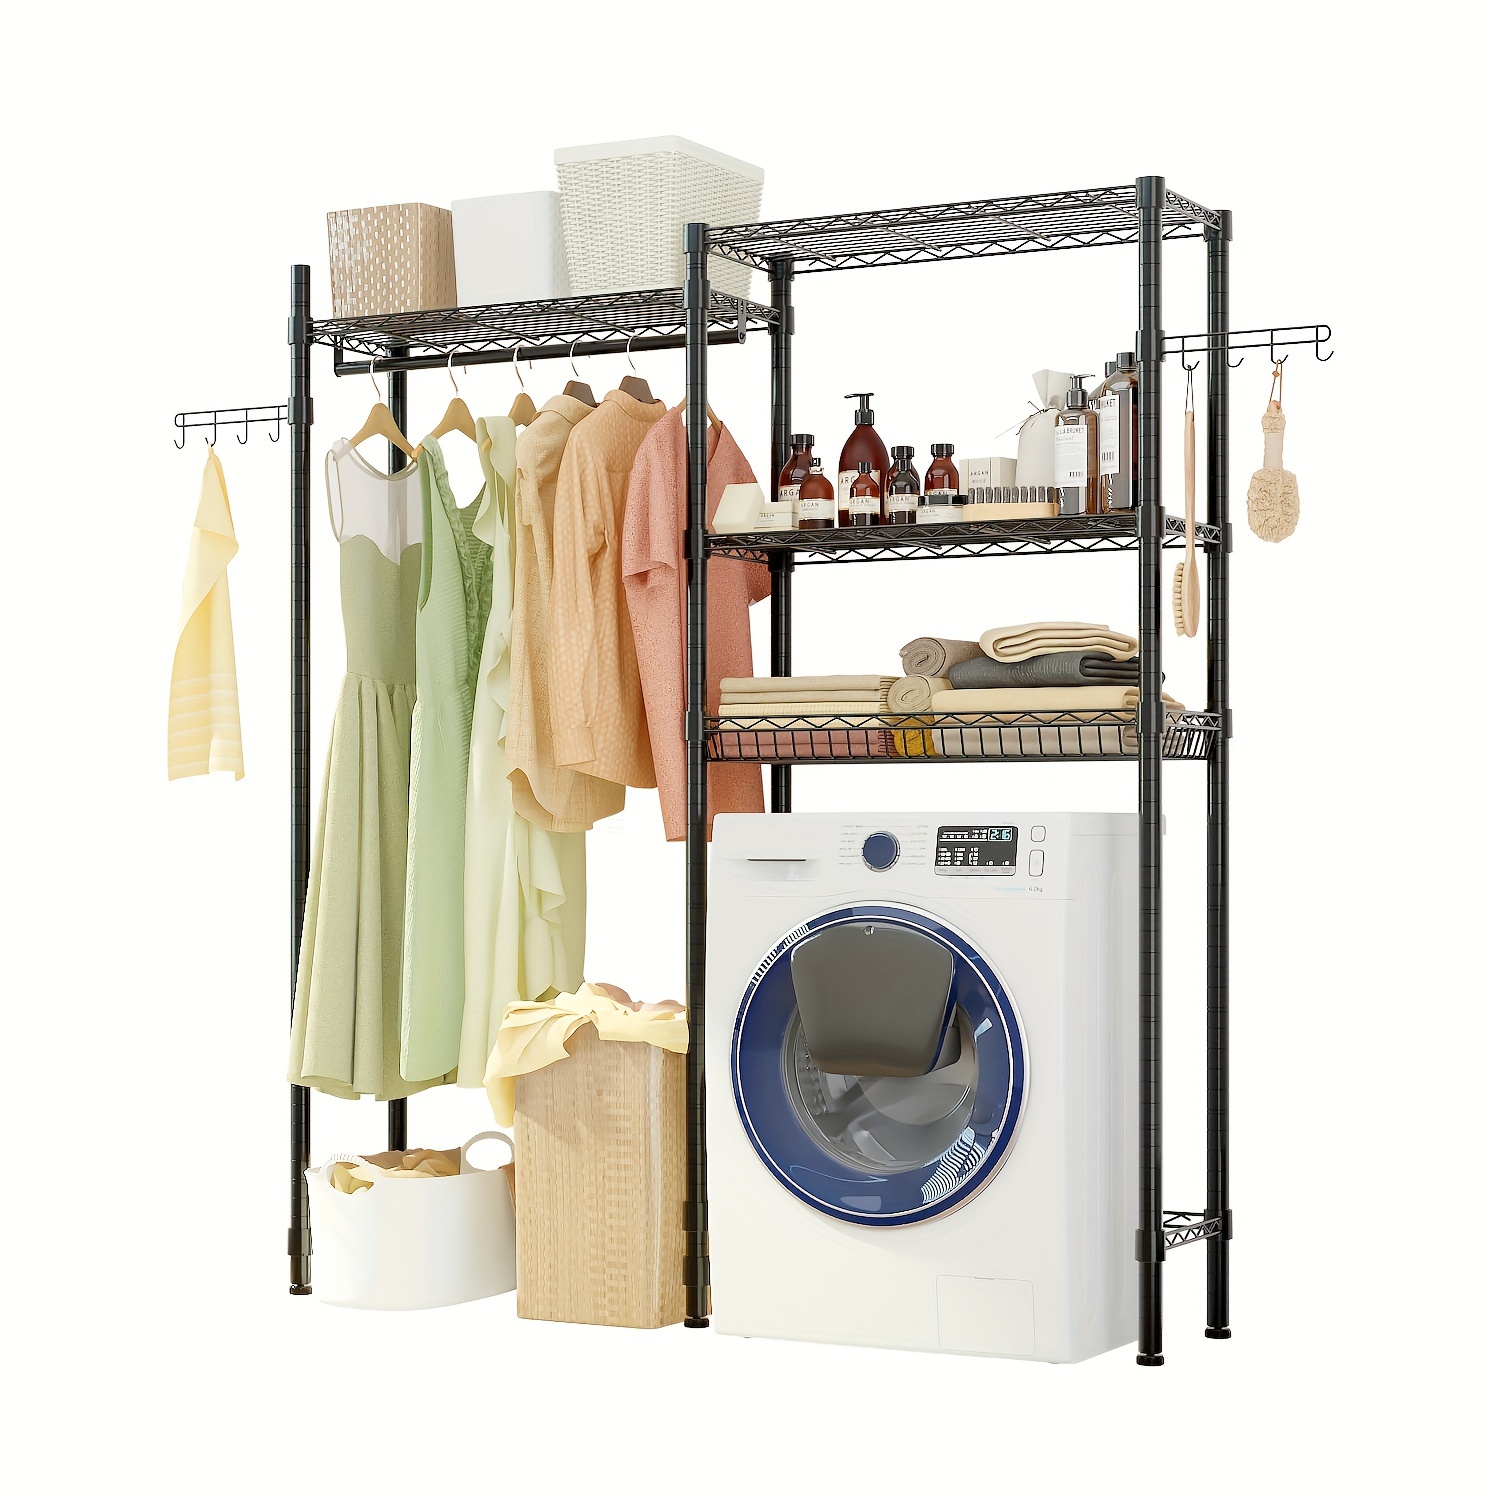 

The Washer And Dryer Storage Shelf Closet Organizer Metal Garment Rack Portable Clothes Hanger Shelf For Hotel